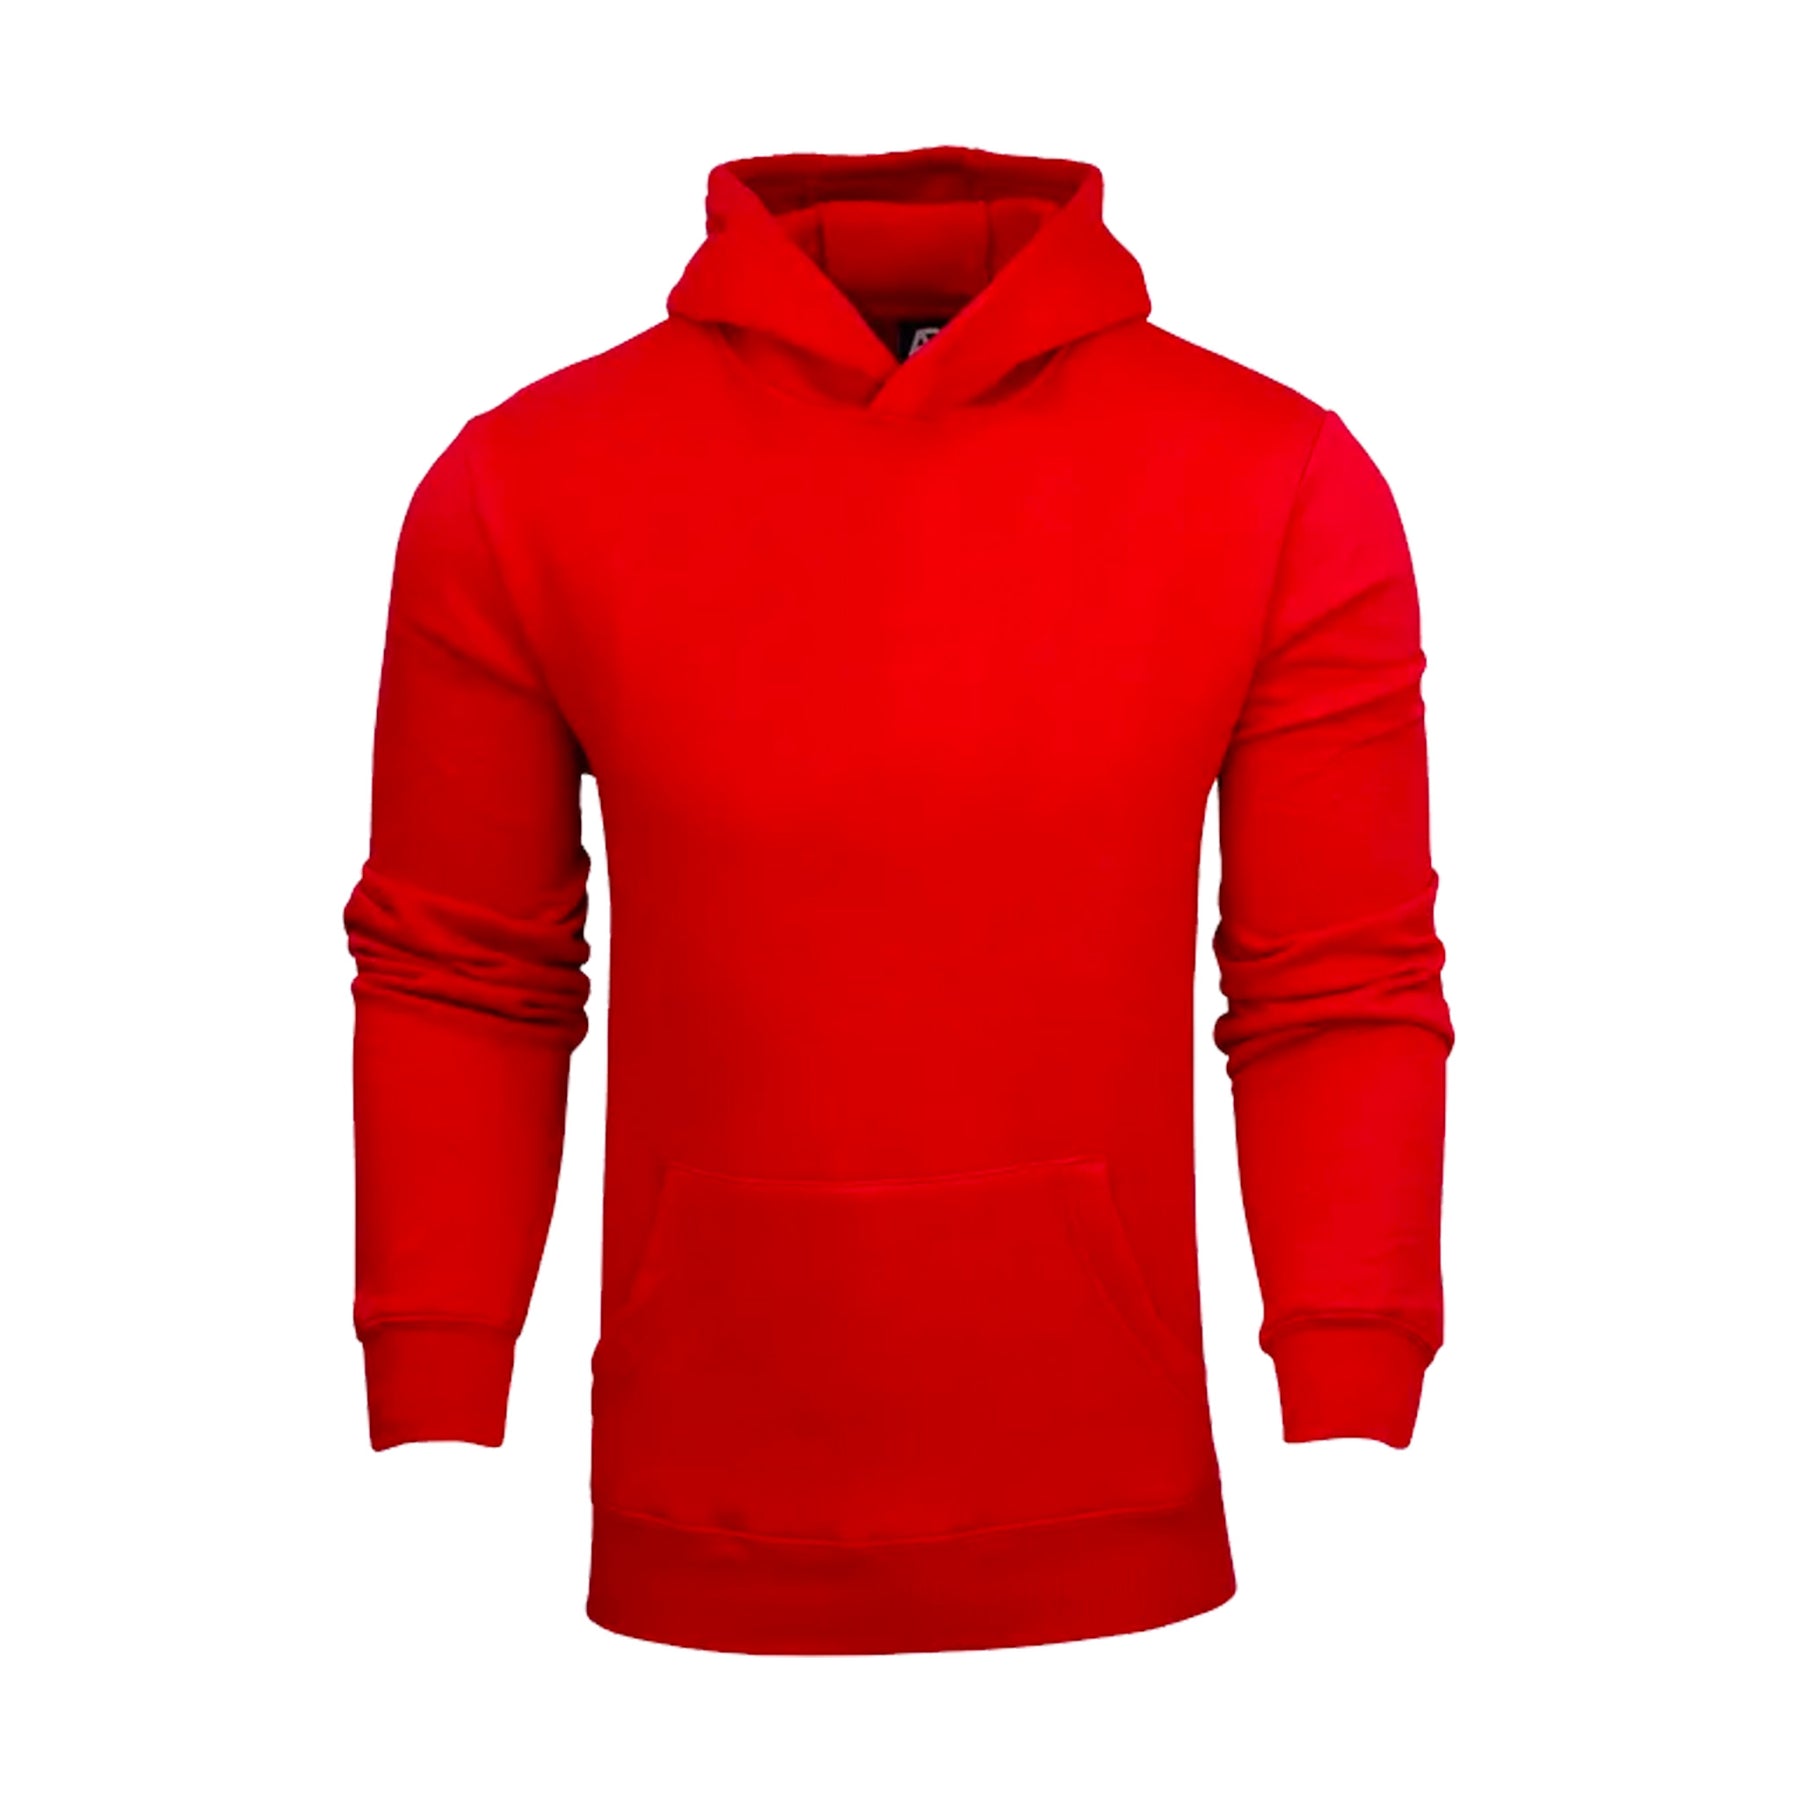 aussie pacific torquay kids hoodie in red